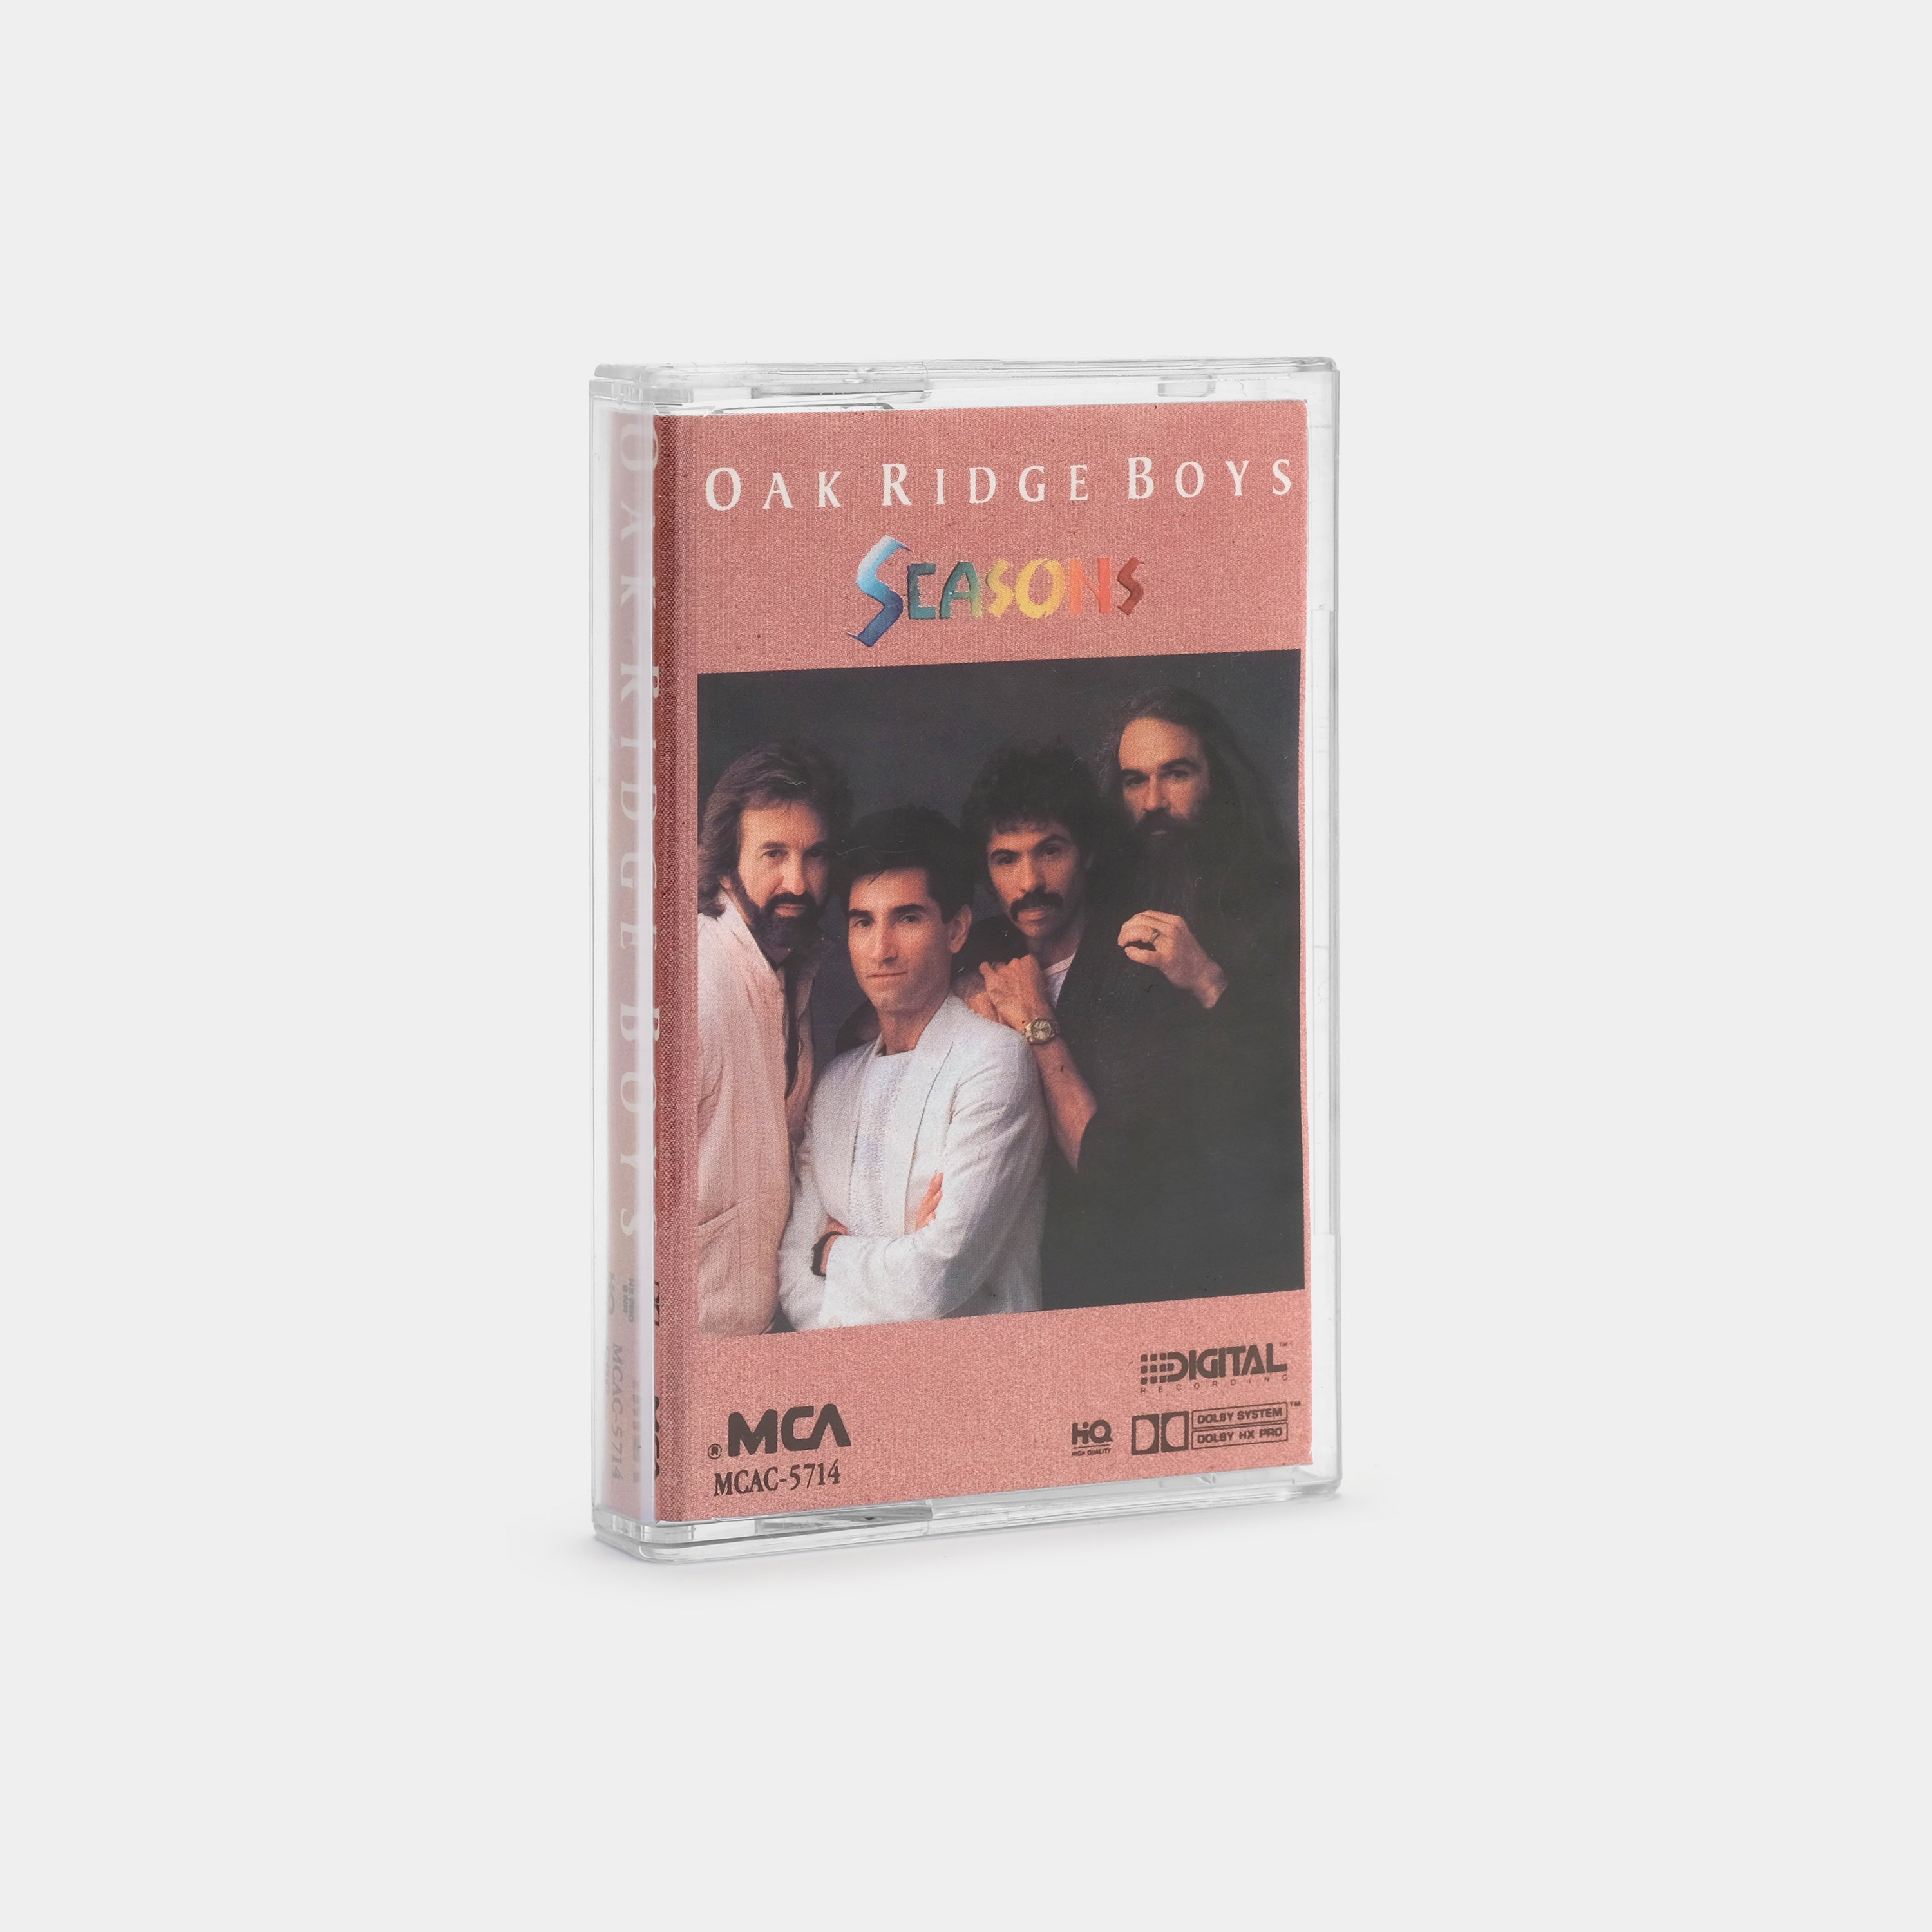 The Oak Ridge Boys - Seasons Cassette Tape